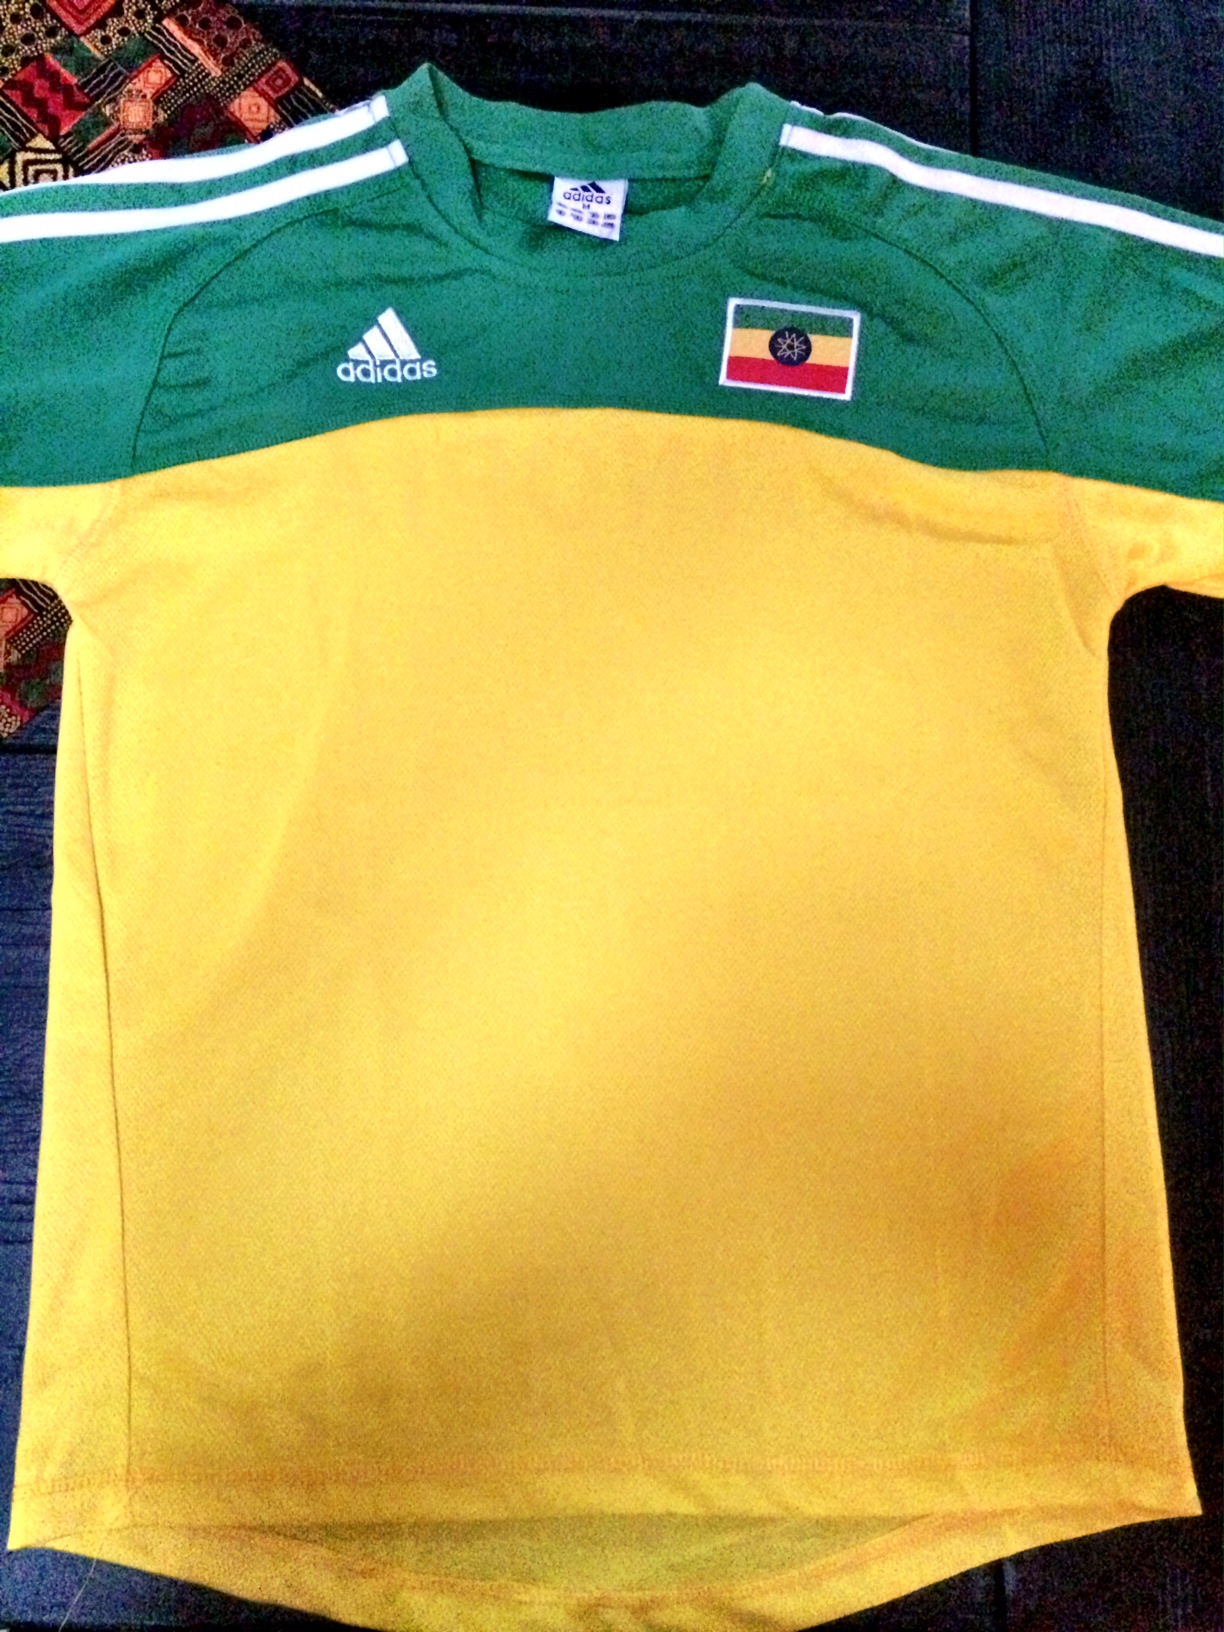 soccer jersey giveaway!  Ethiopian Canadian Kids